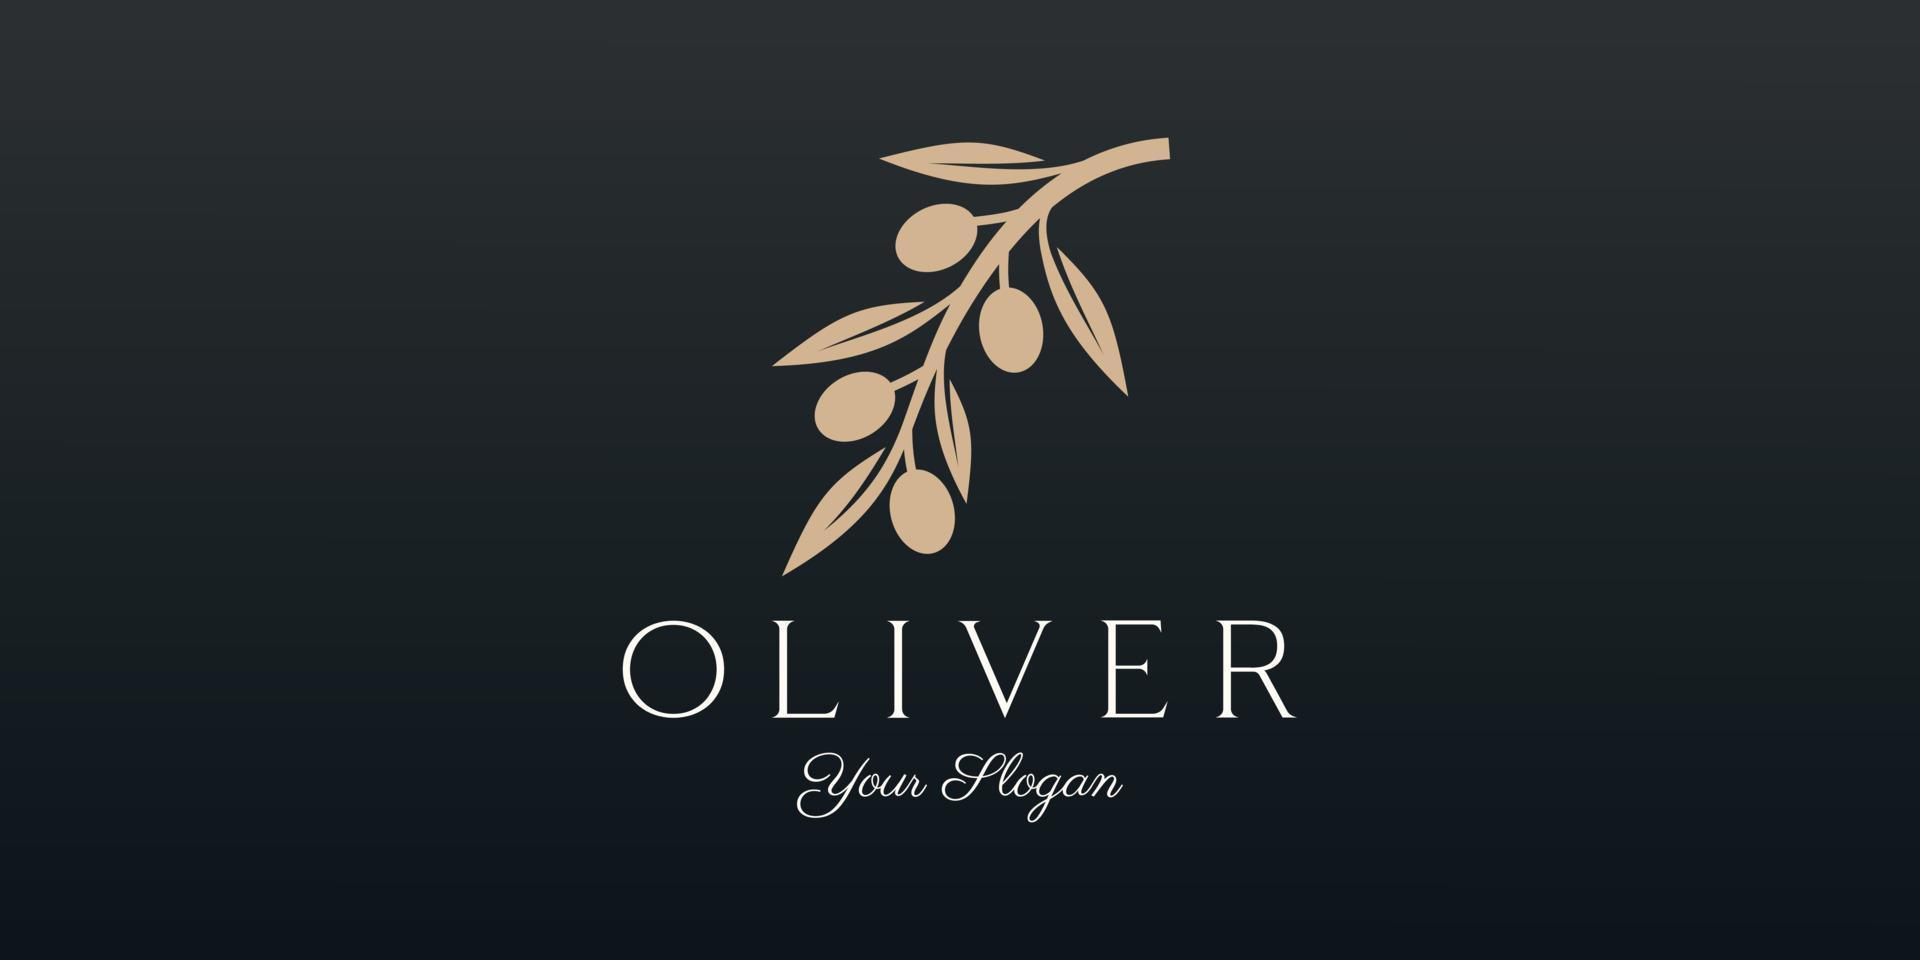 Zweig Olive Öl Logo Vorlage Symbol Design vektor